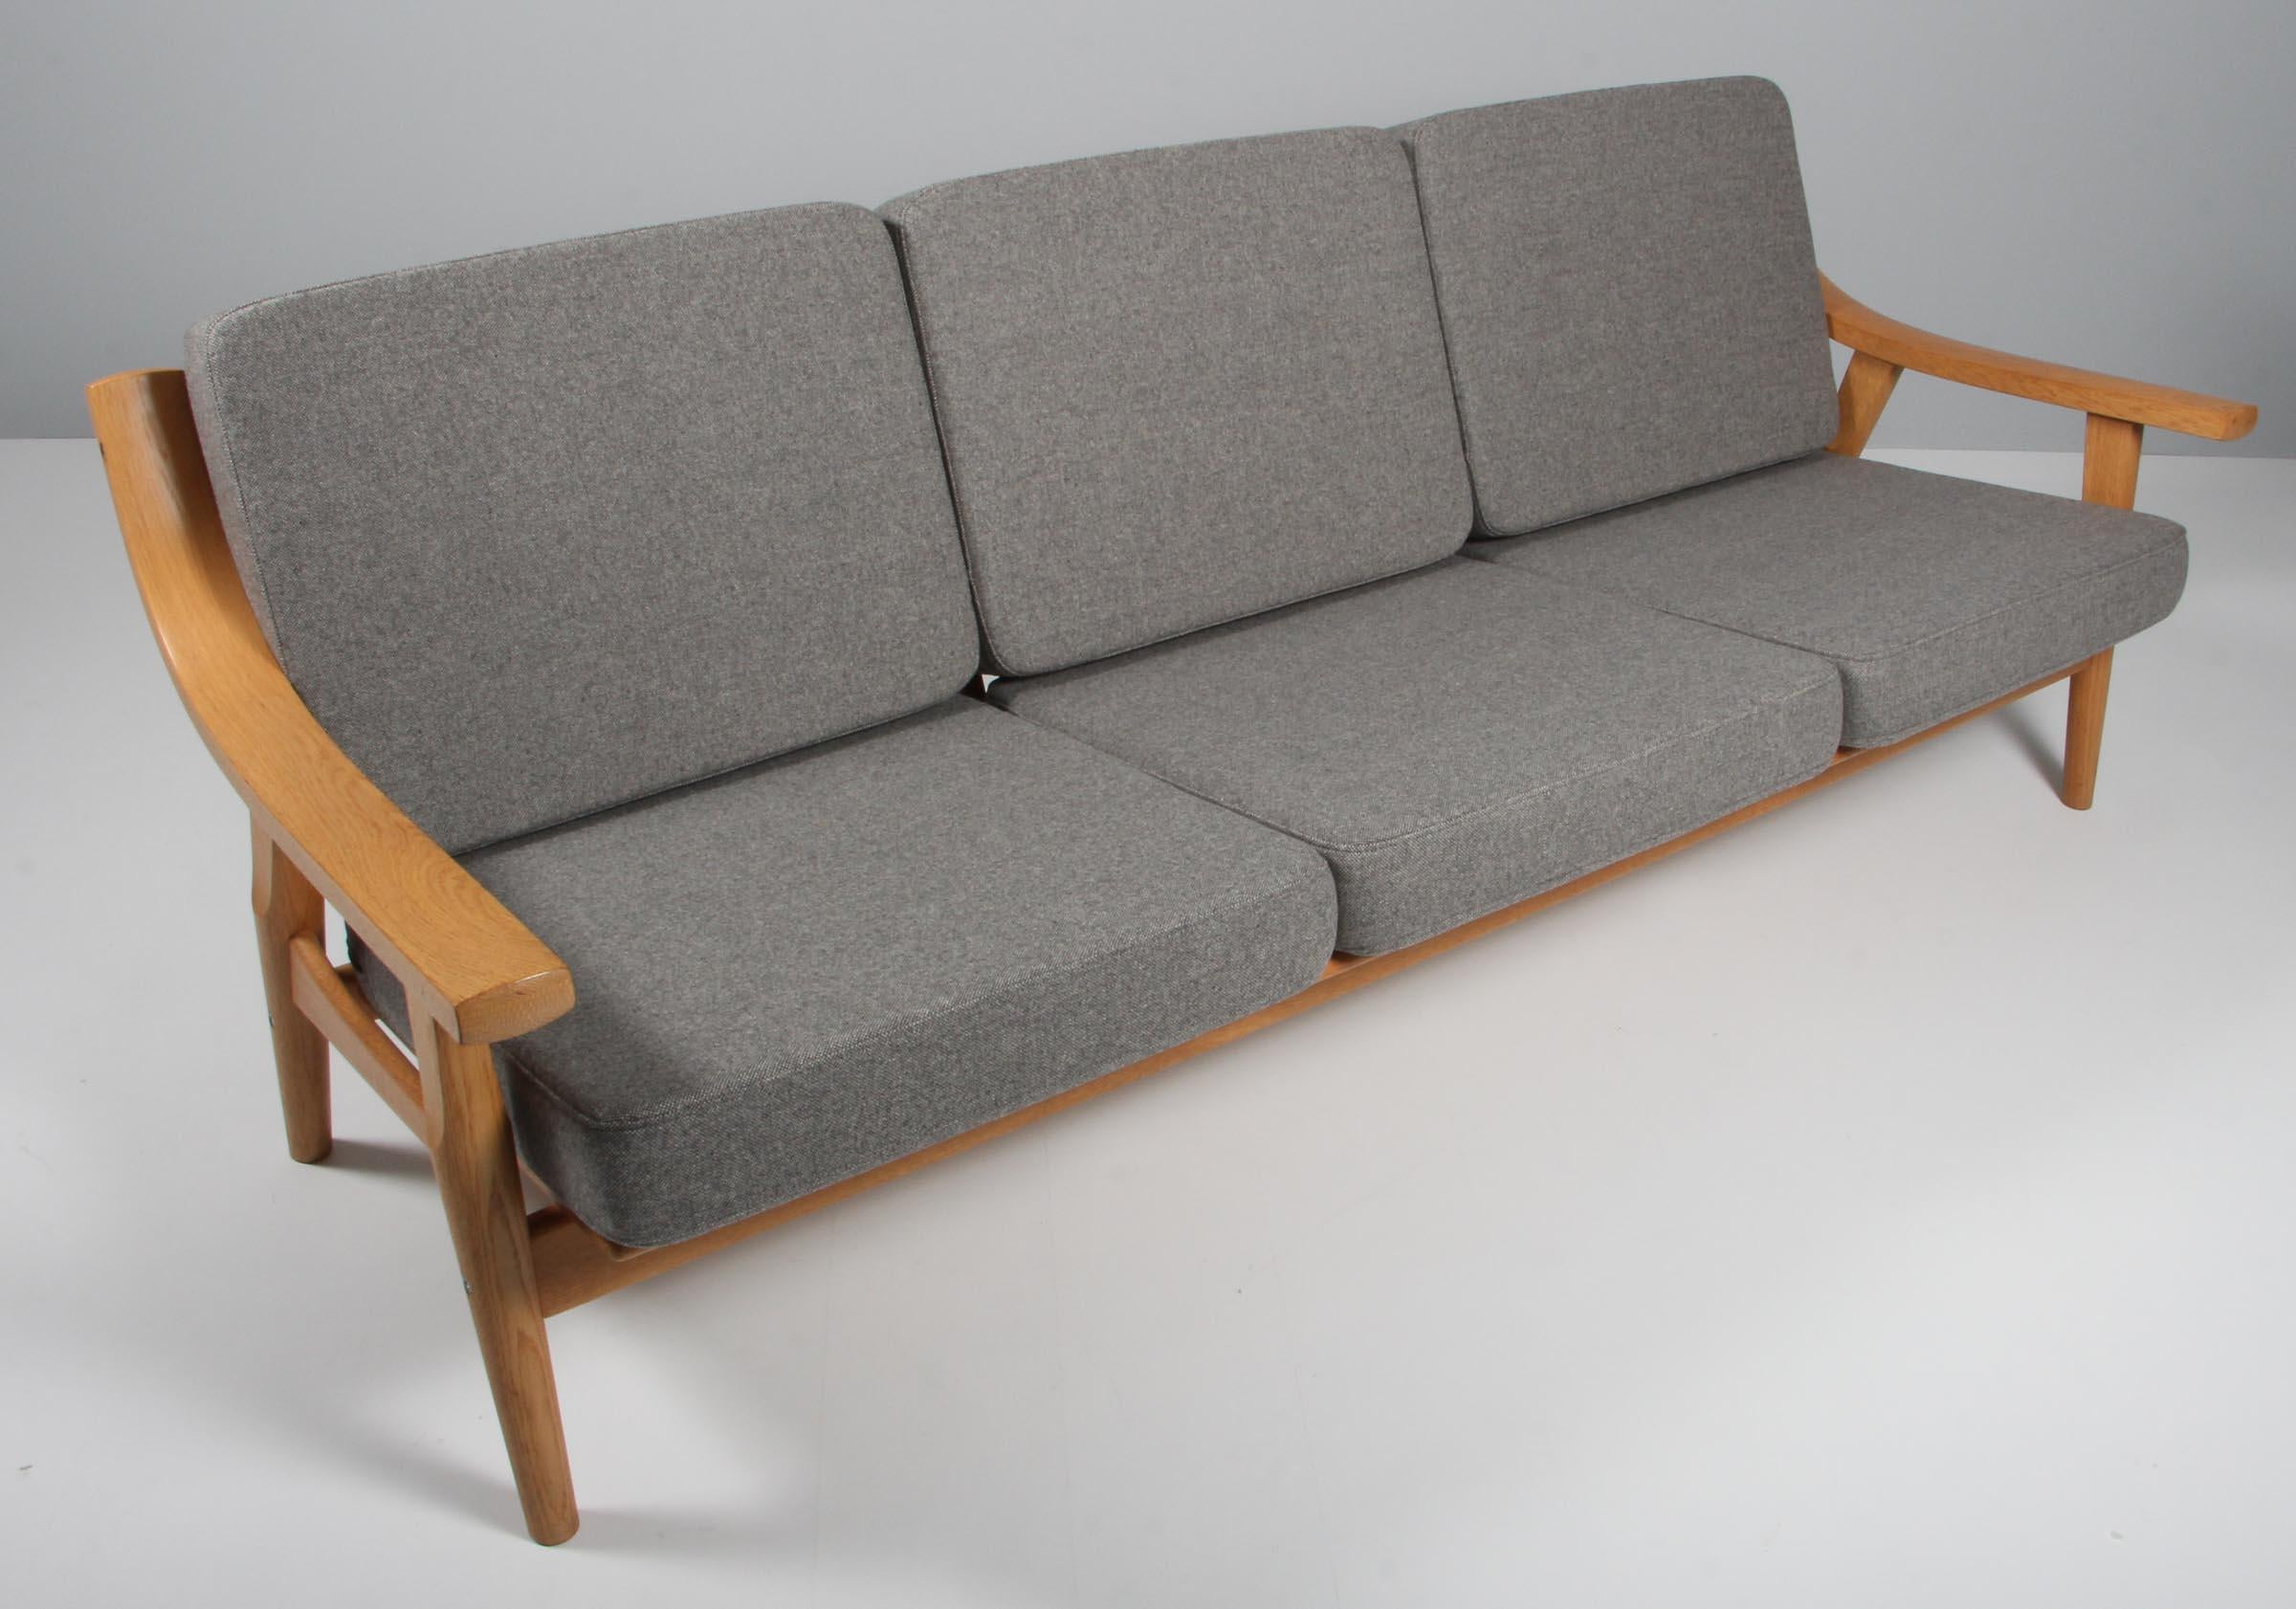 Hans J. Wegner three-seat sofa made of oak.

New upholstered with grey Magrethe wool.

Model GE530, made by Getama.

